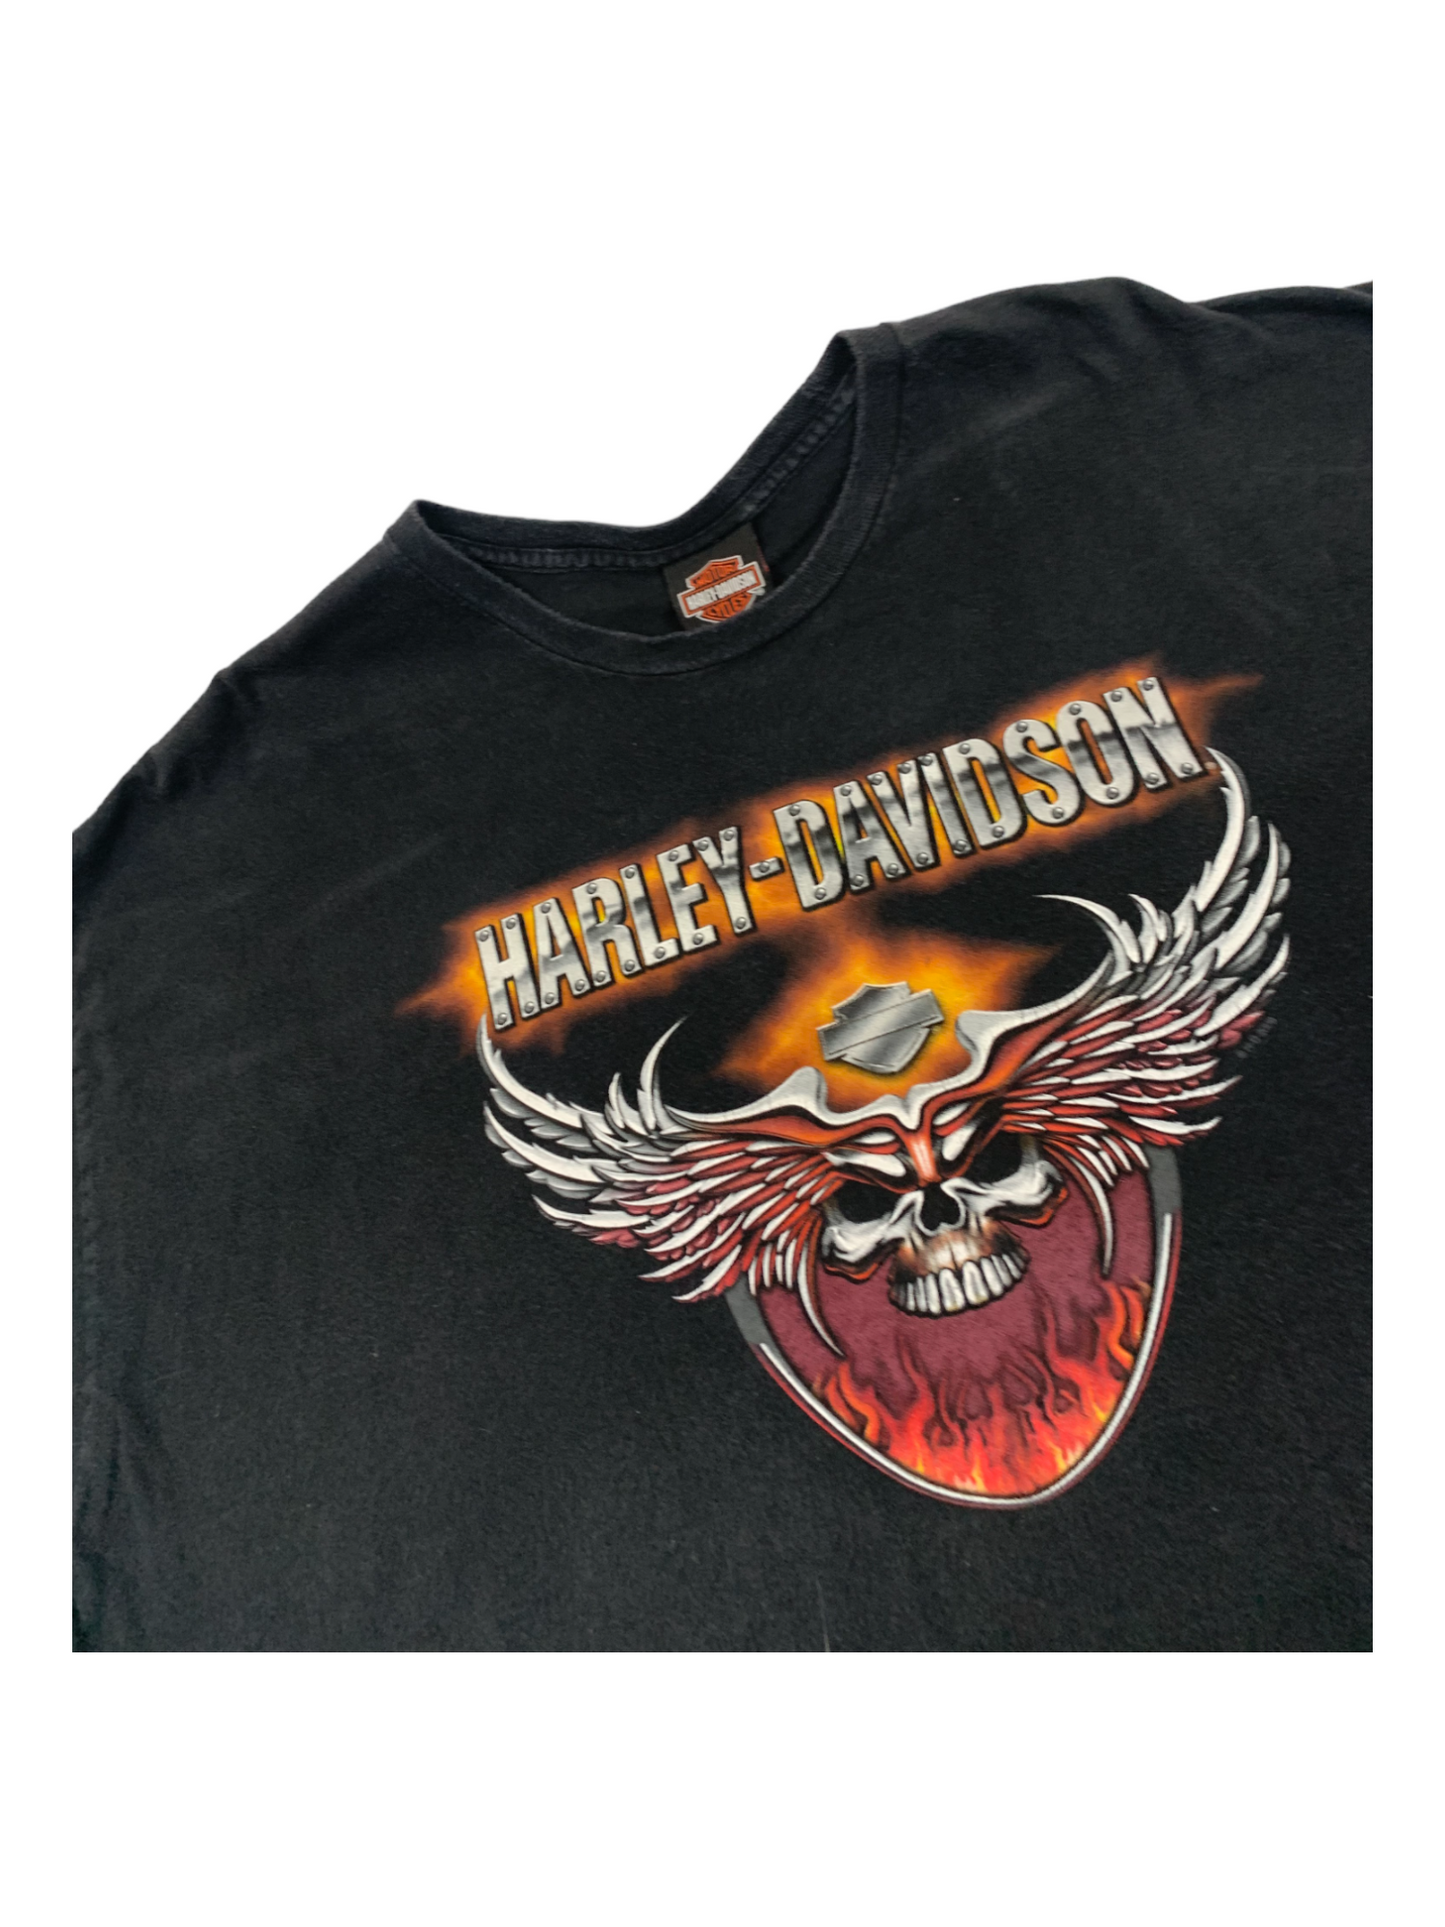 Harley Davidson Twin Cities Minneapolis-St.Paul T-Shirt